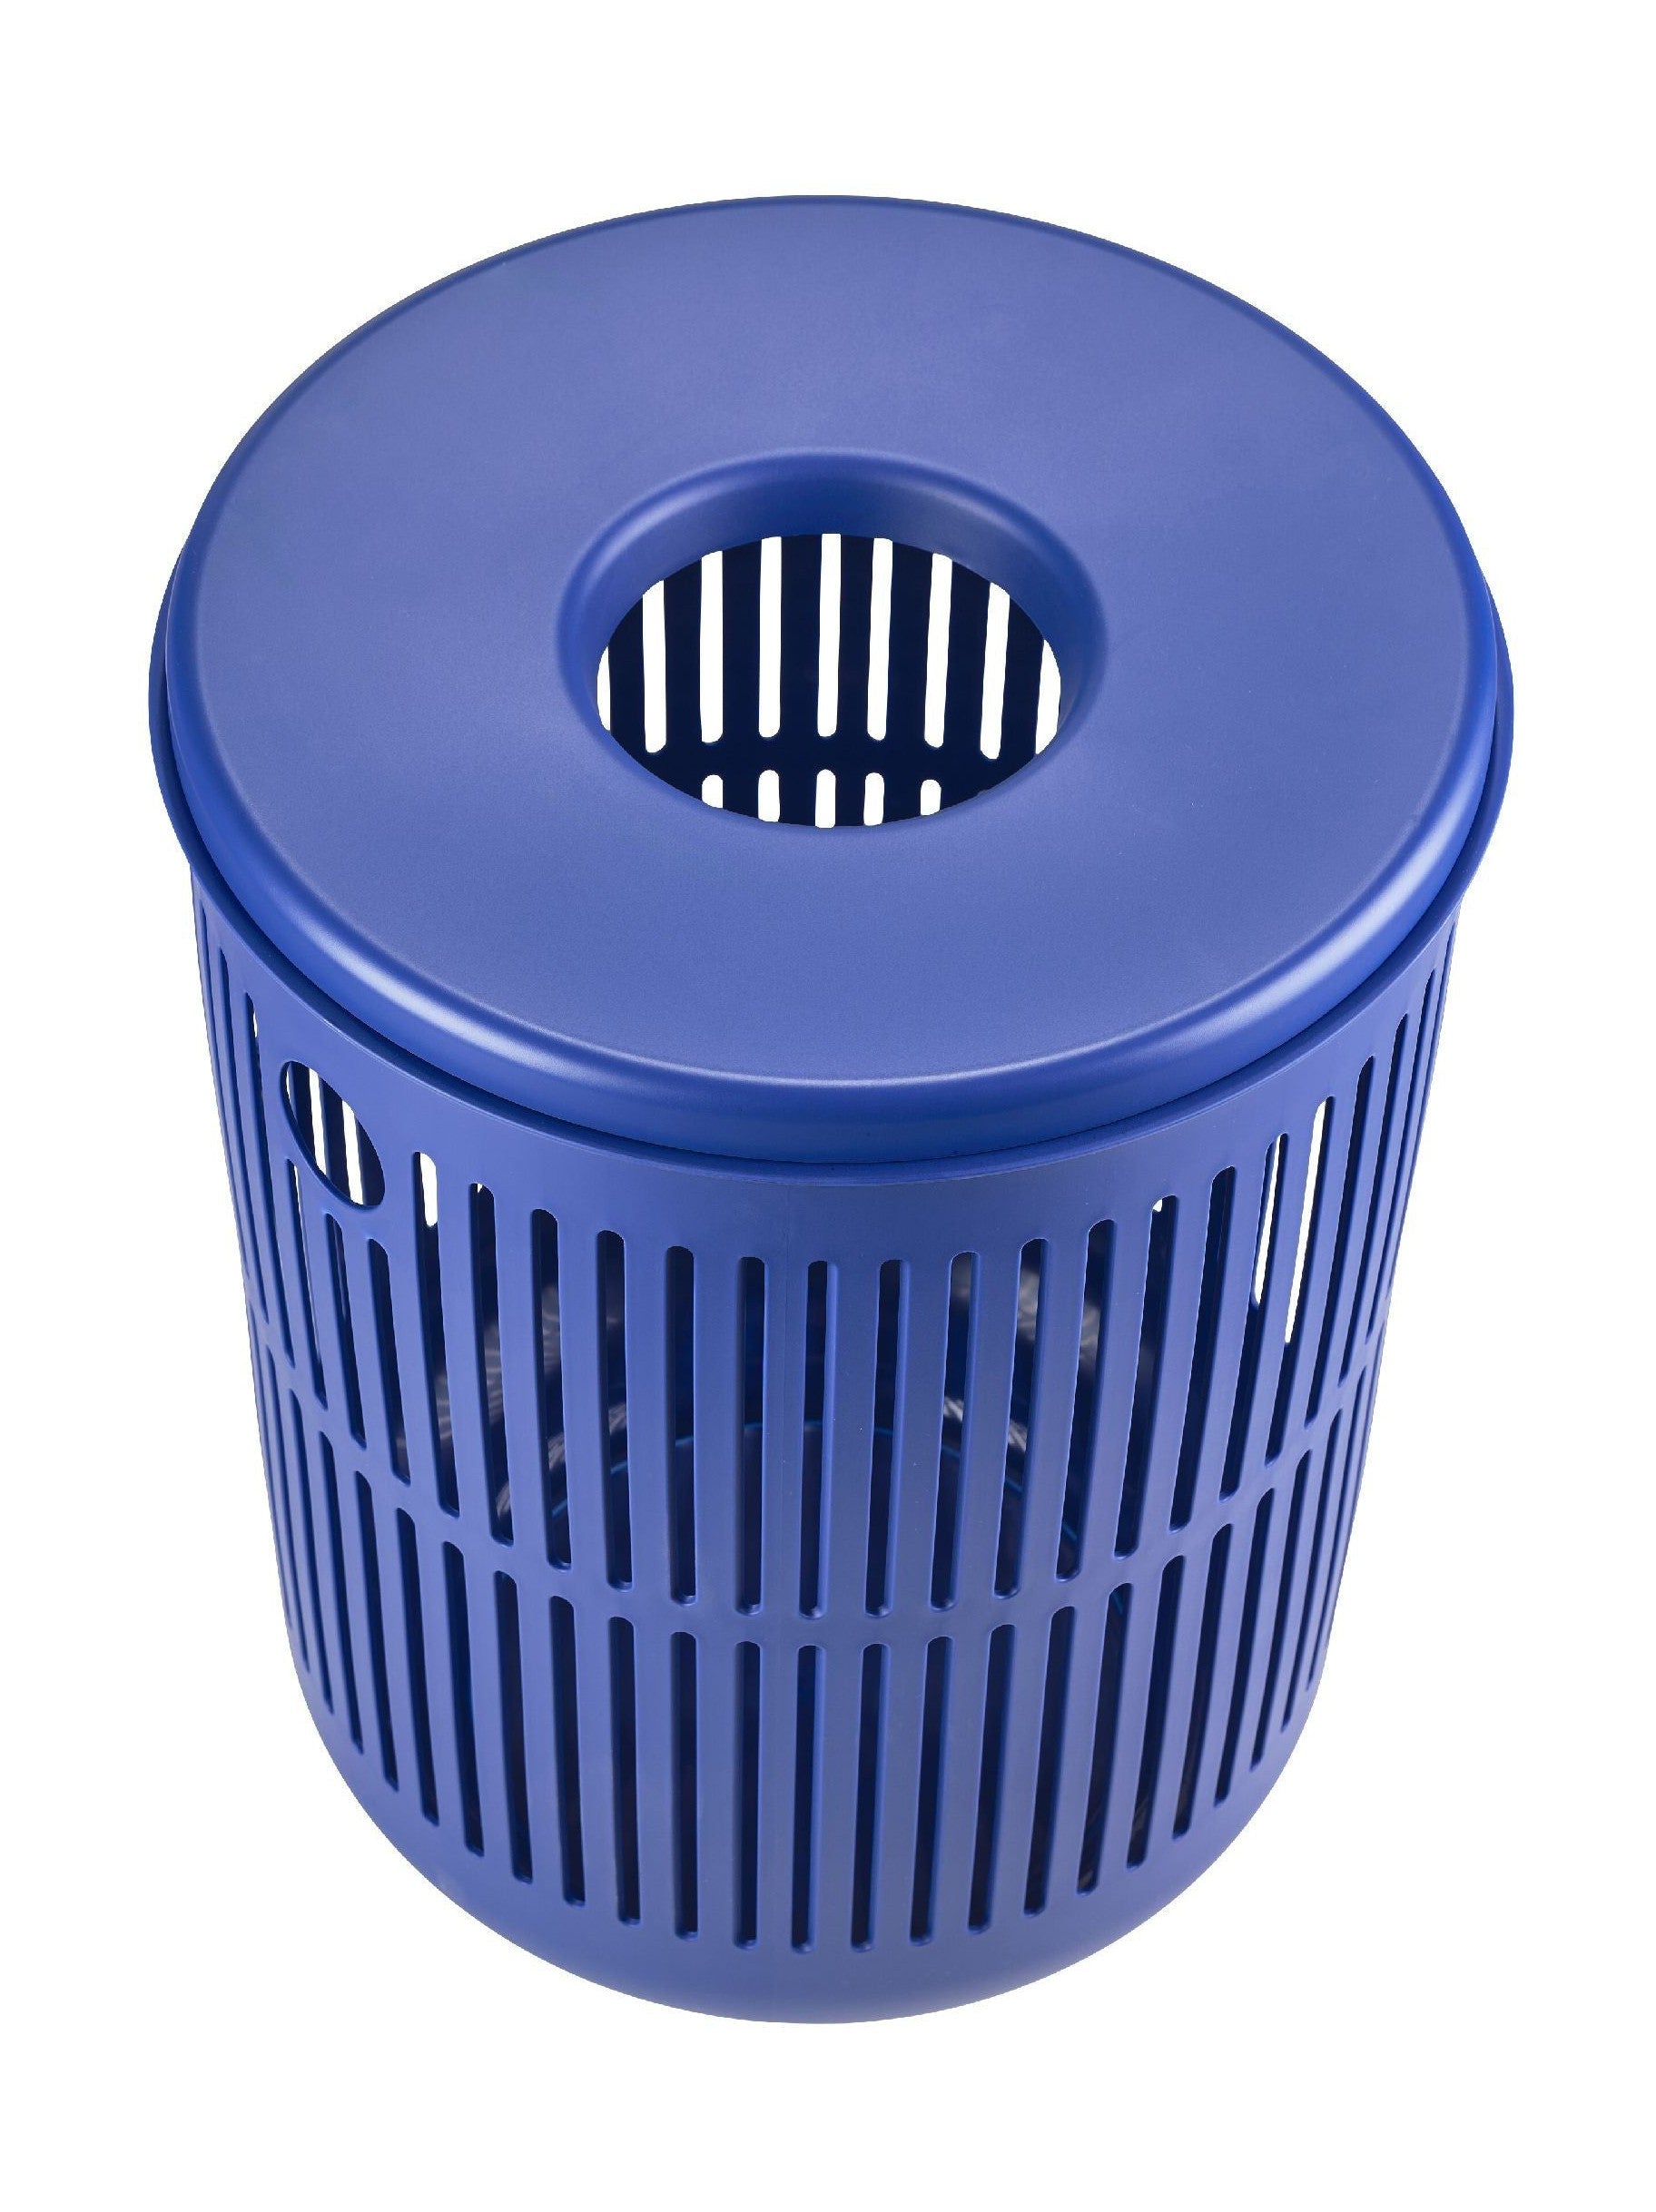 Zone Denmark Ume Laundry Basket 60 Liter, Indigo Blue